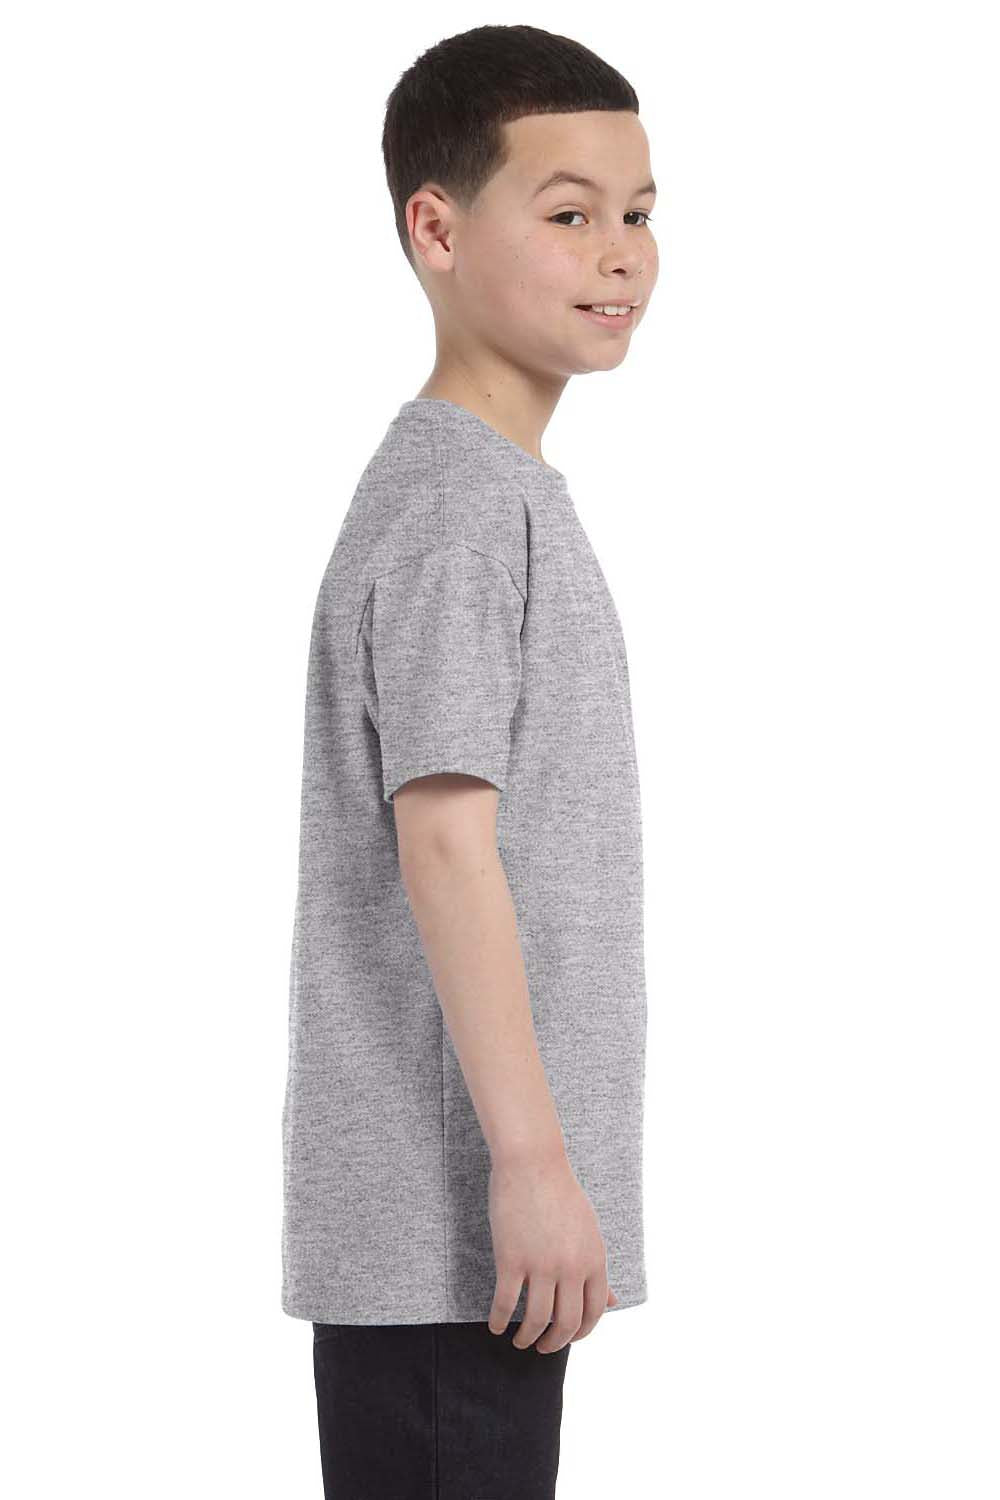 Gildan G500B Youth Short Sleeve Crewneck T-Shirt Sport Grey Side